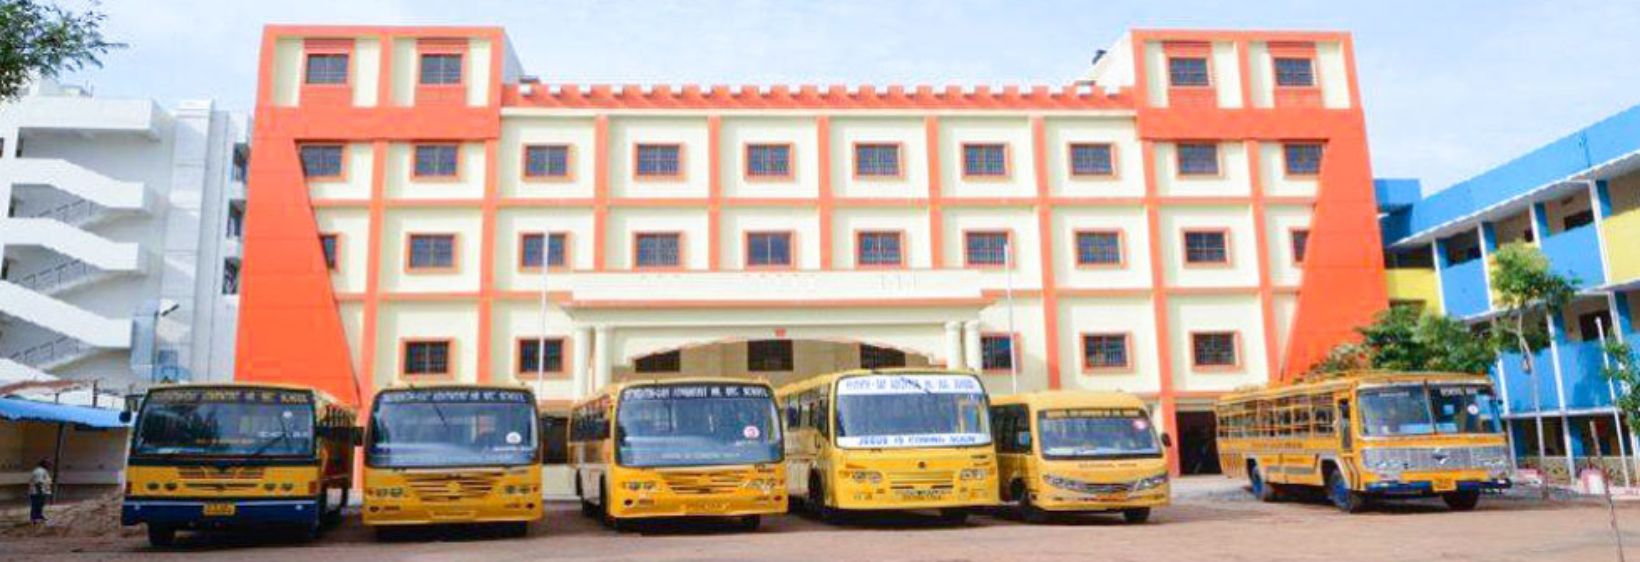 Florida College of Nursing - Bangalore